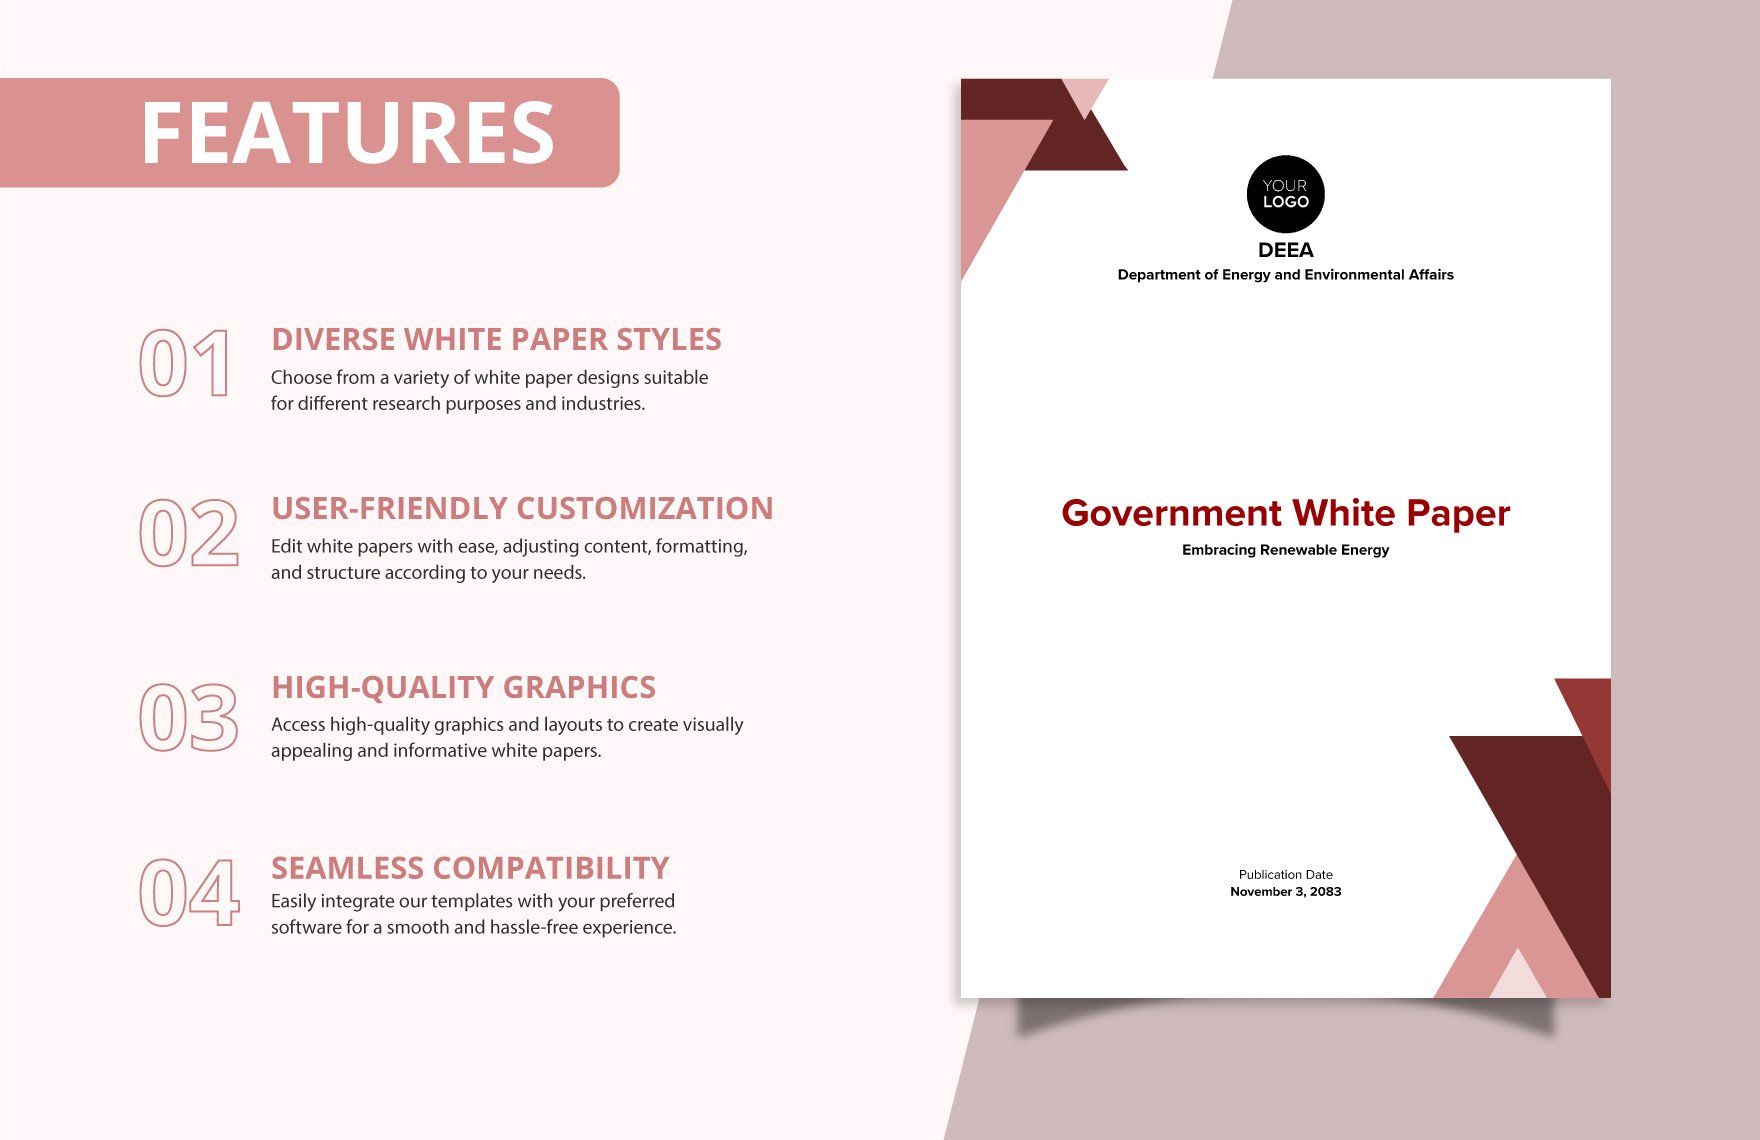 Government White Paper Template